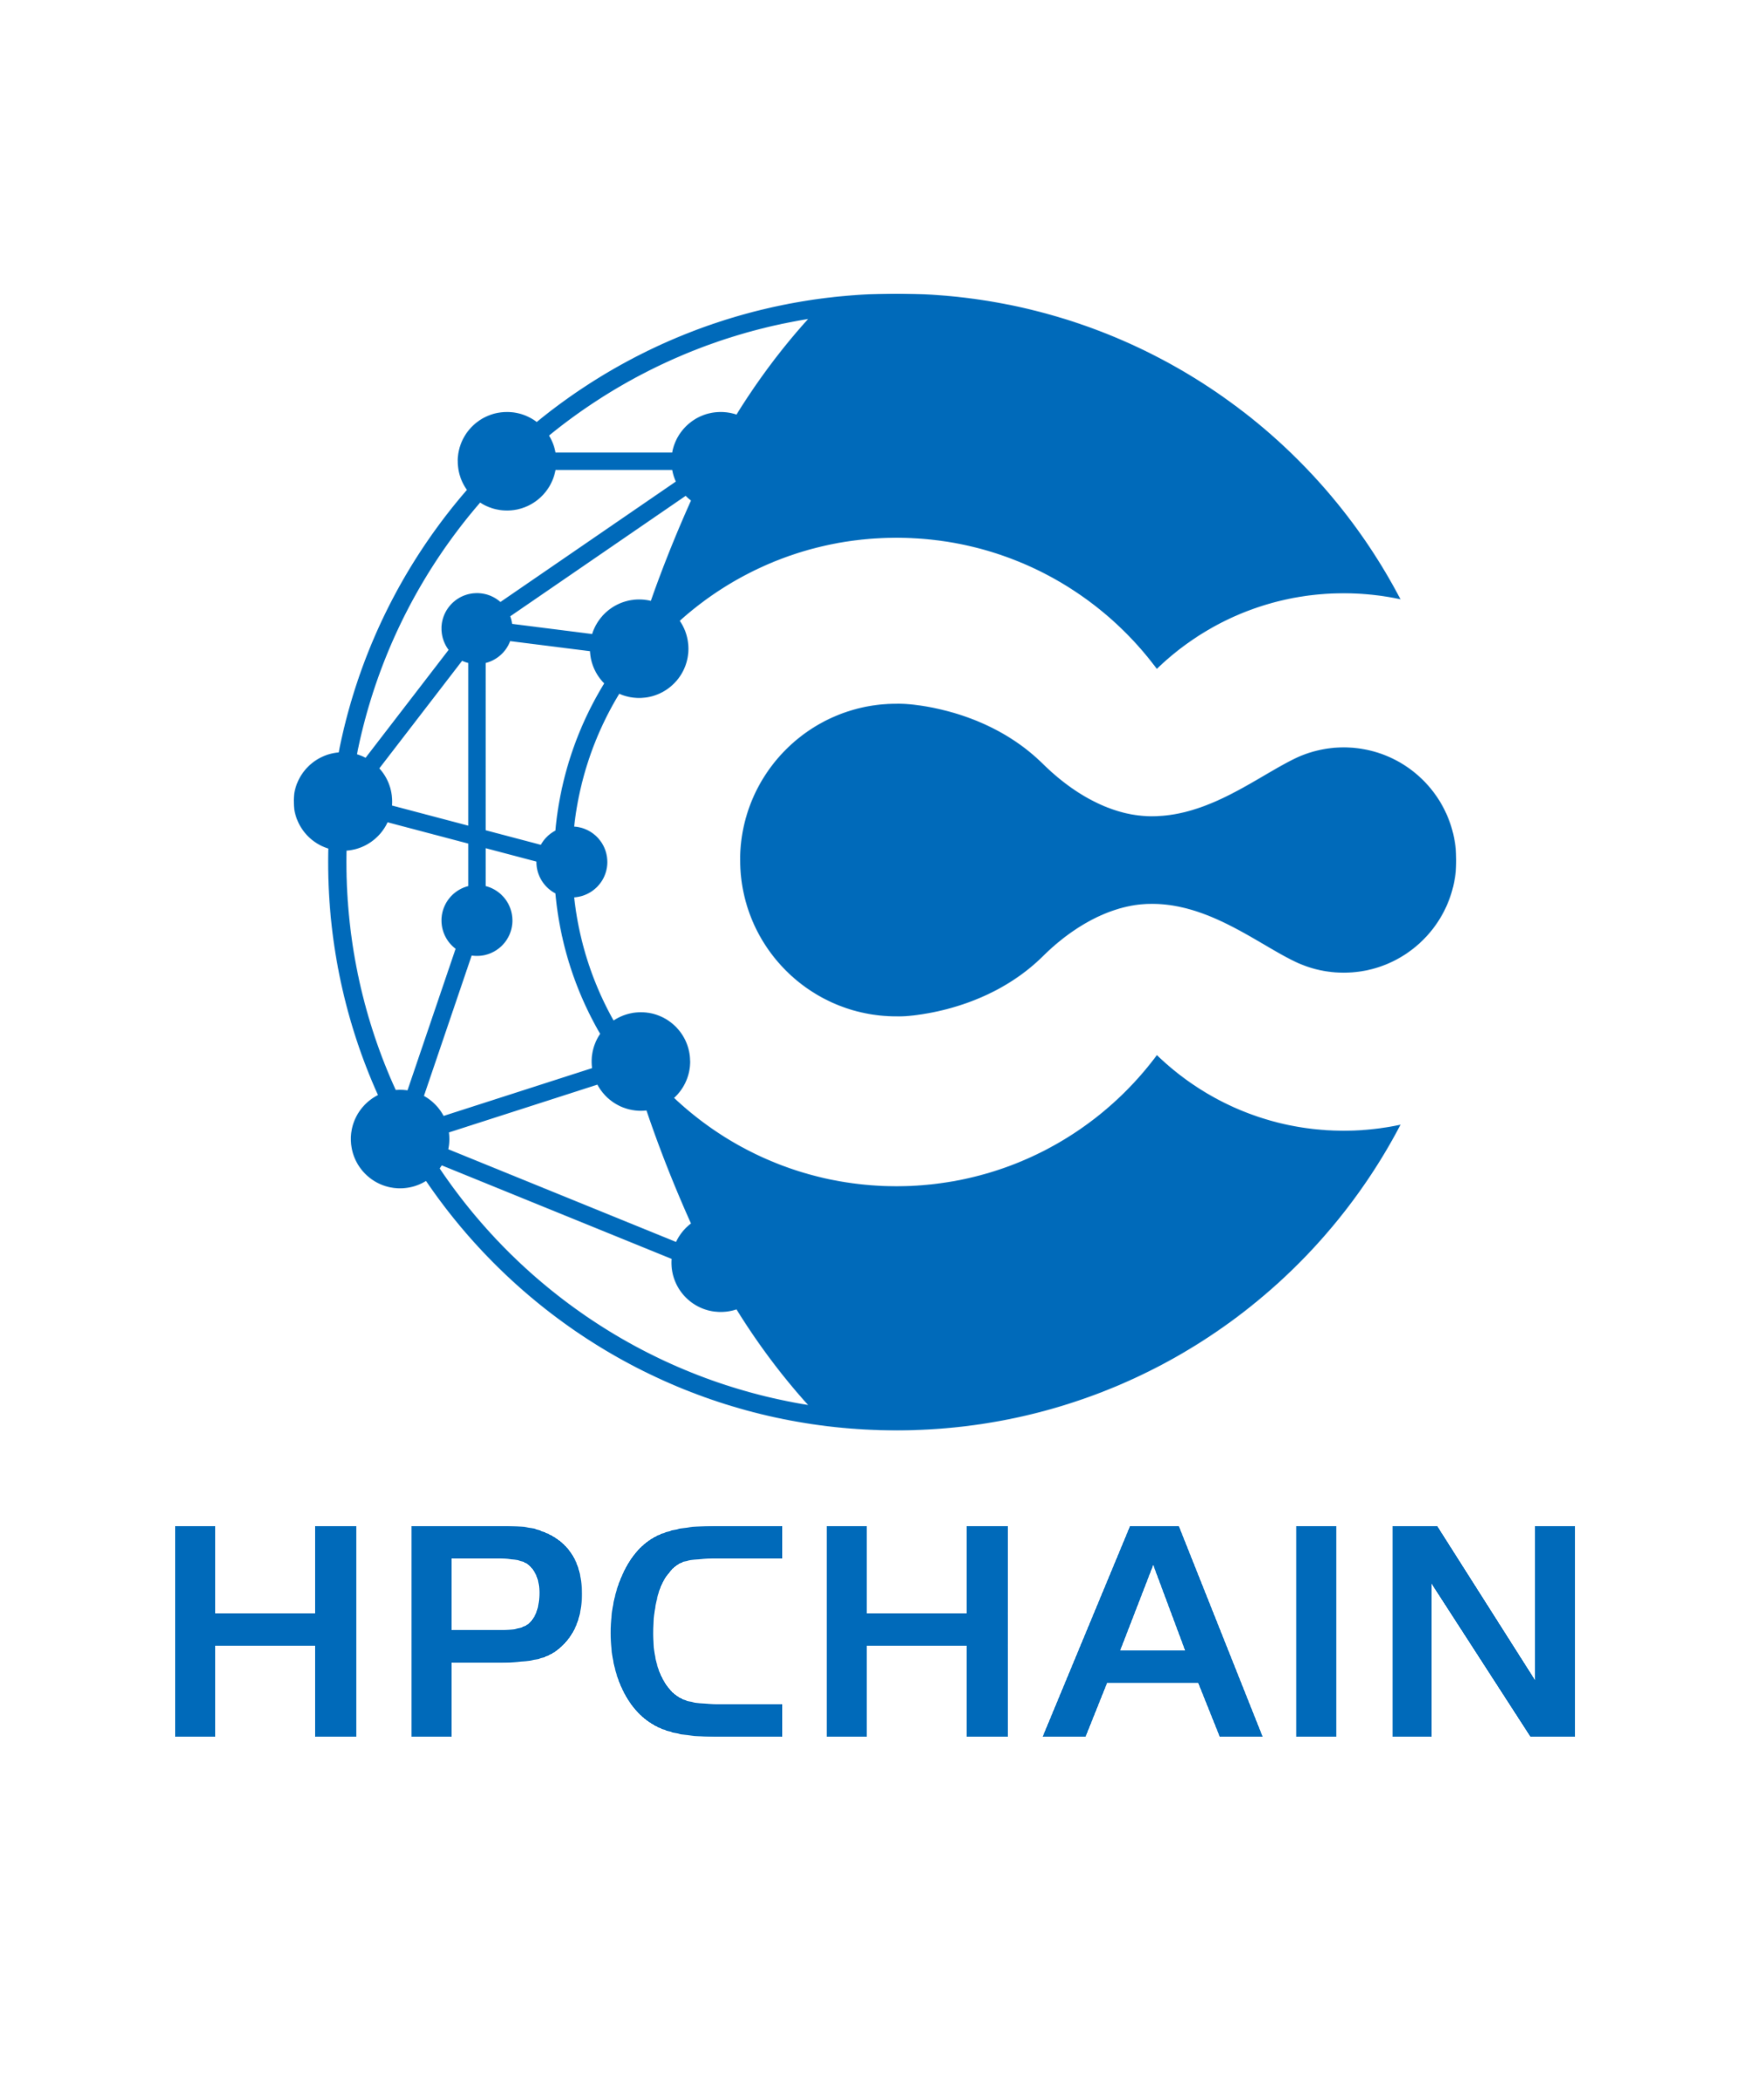 HPChain's logo